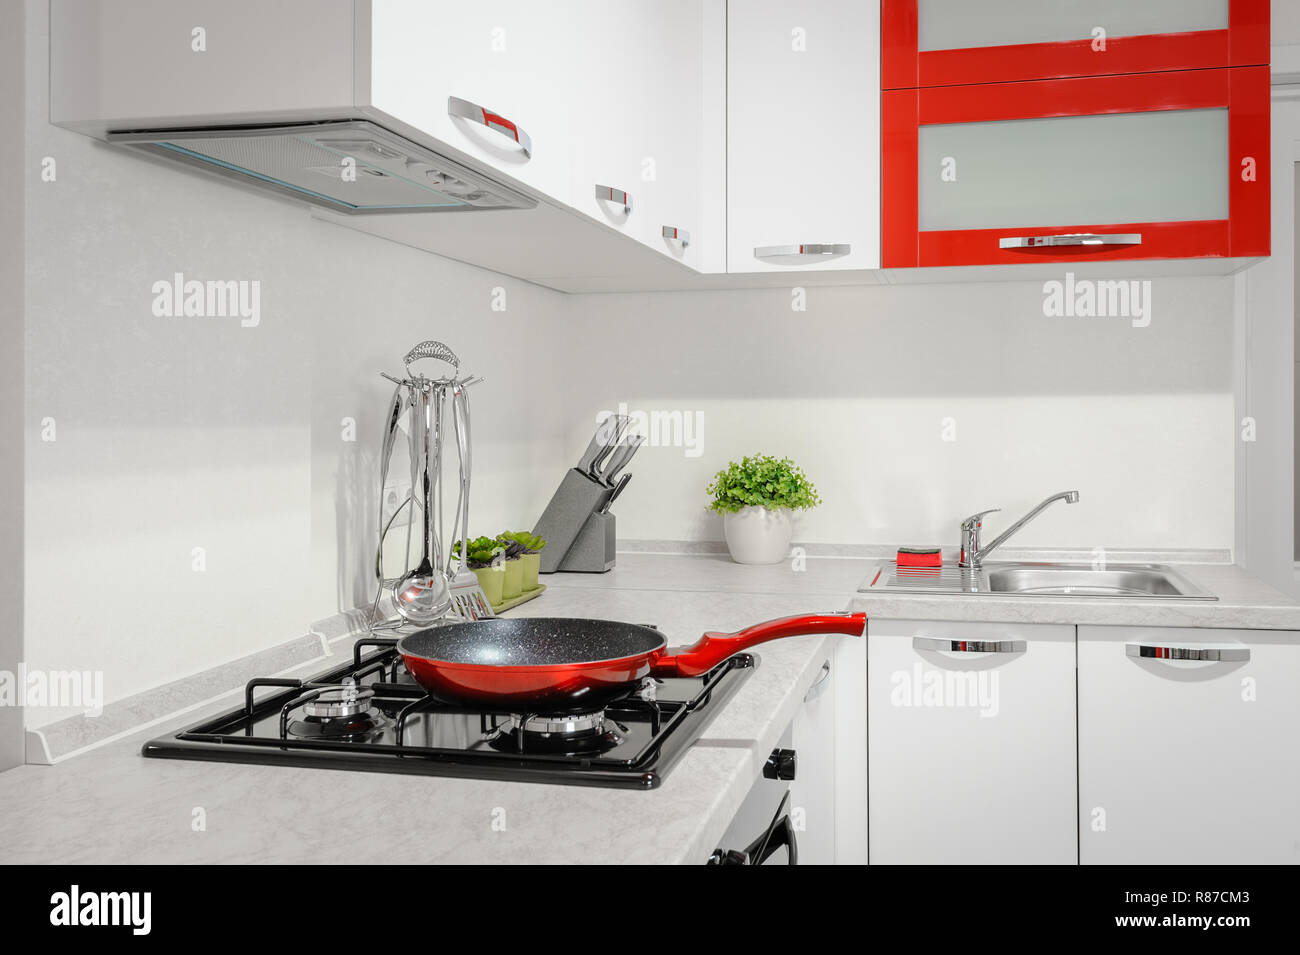 Modern Red And White Kitchen Interior Stock Photo 228815667